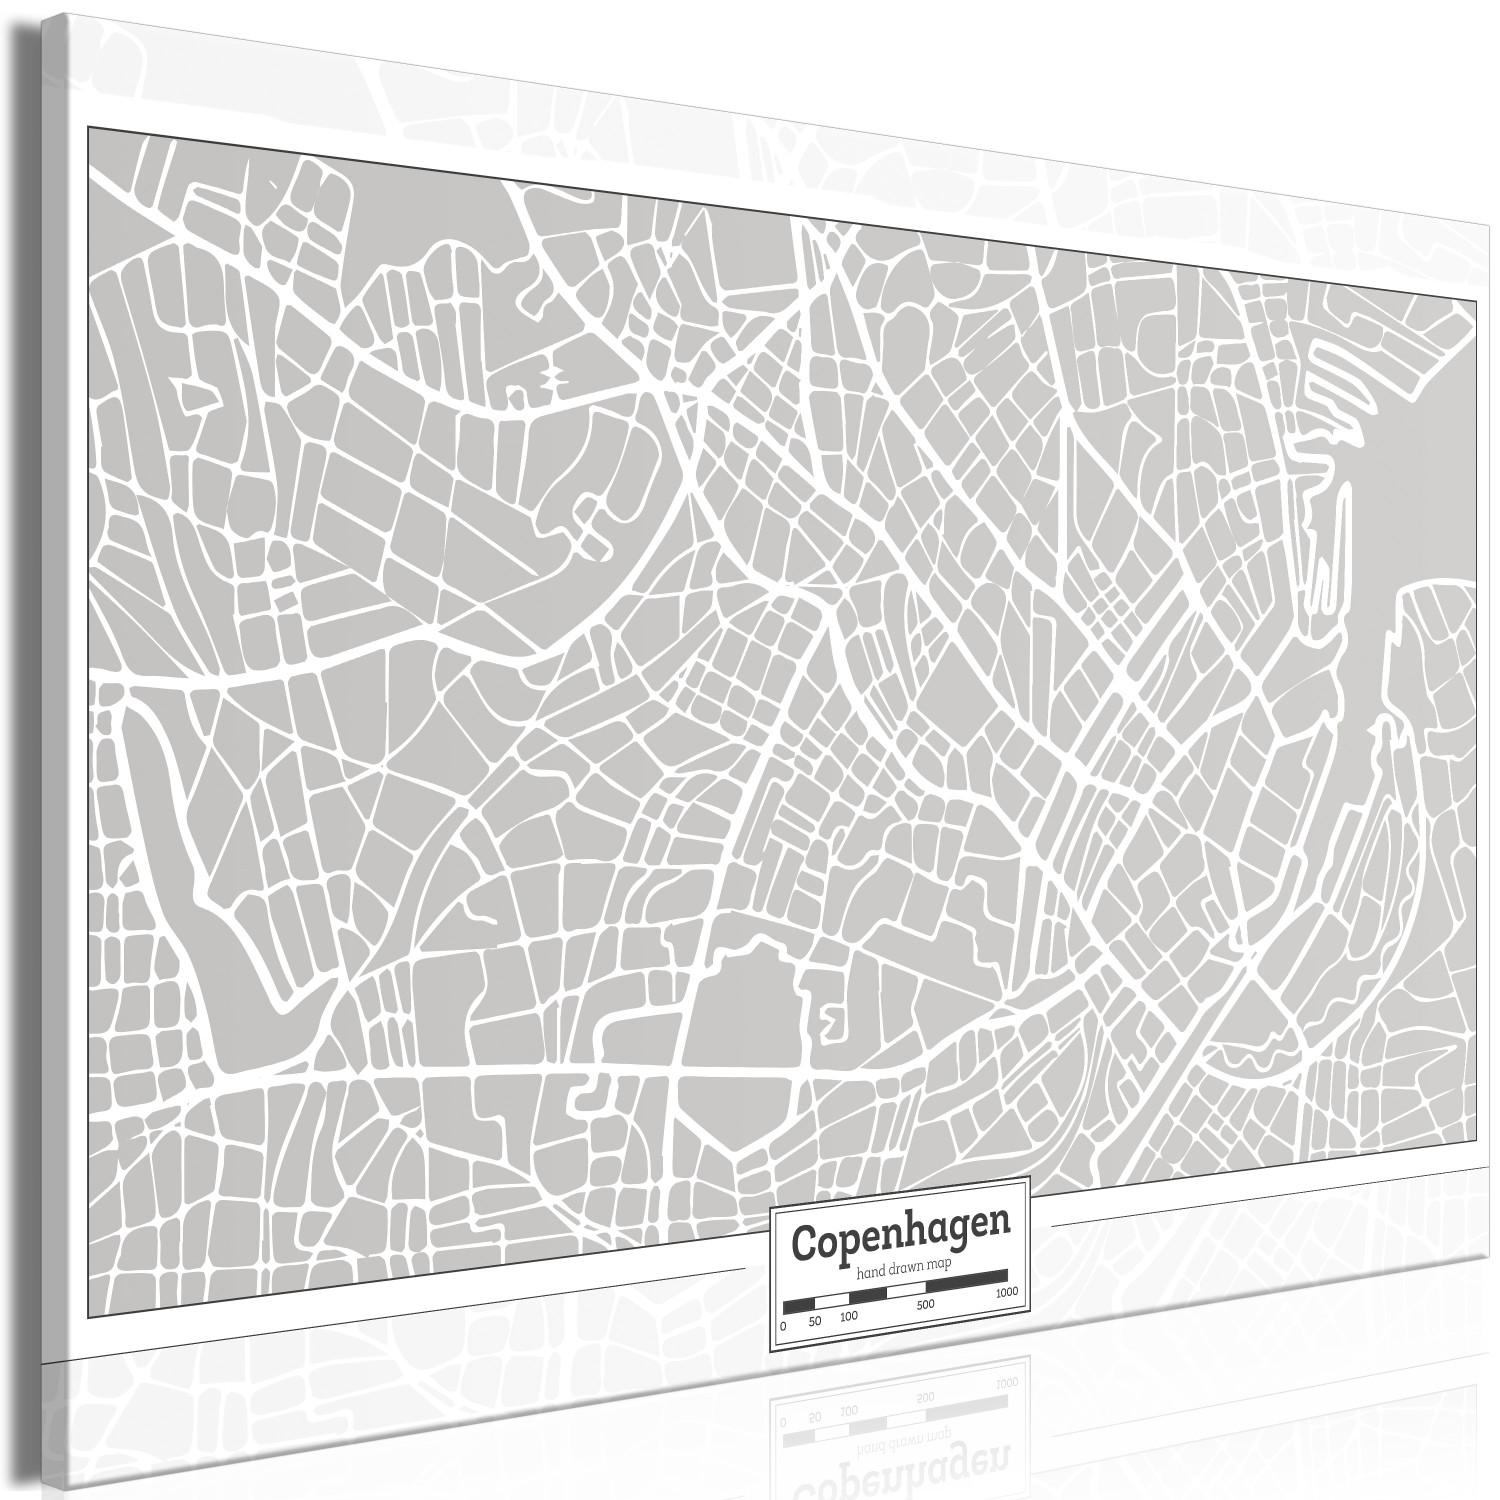 Cuadro Copenhague en gris - plano de Copenhague en gris con escala adjunta